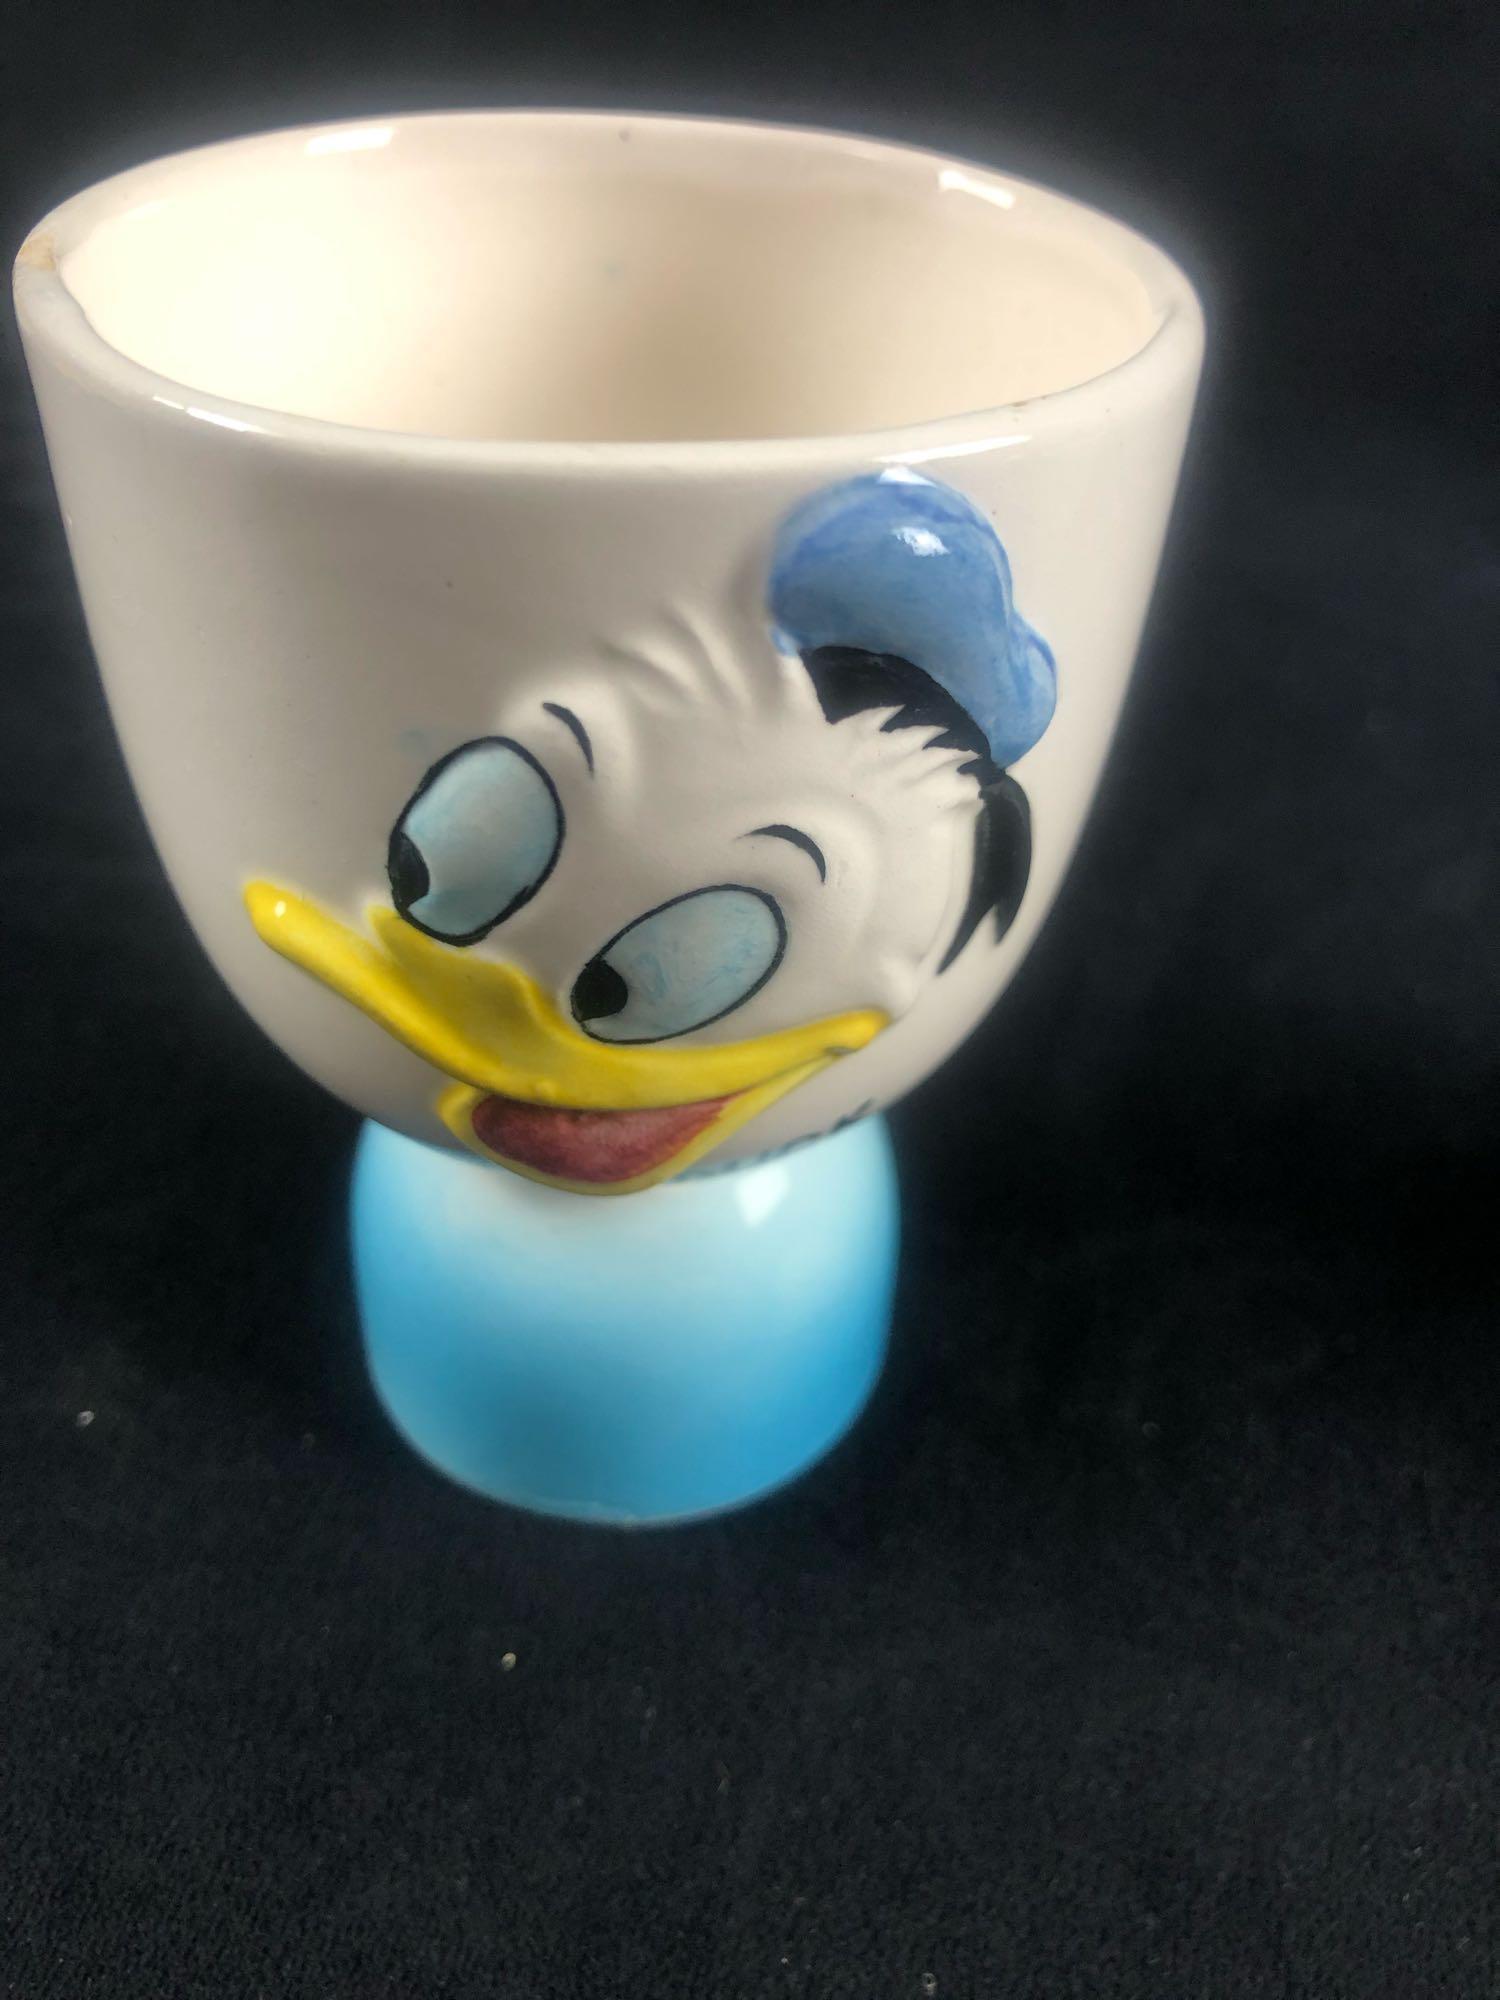 Lot of 2 Vintage Donald Duck Egg Cup Kitchen Walt Disney Productions